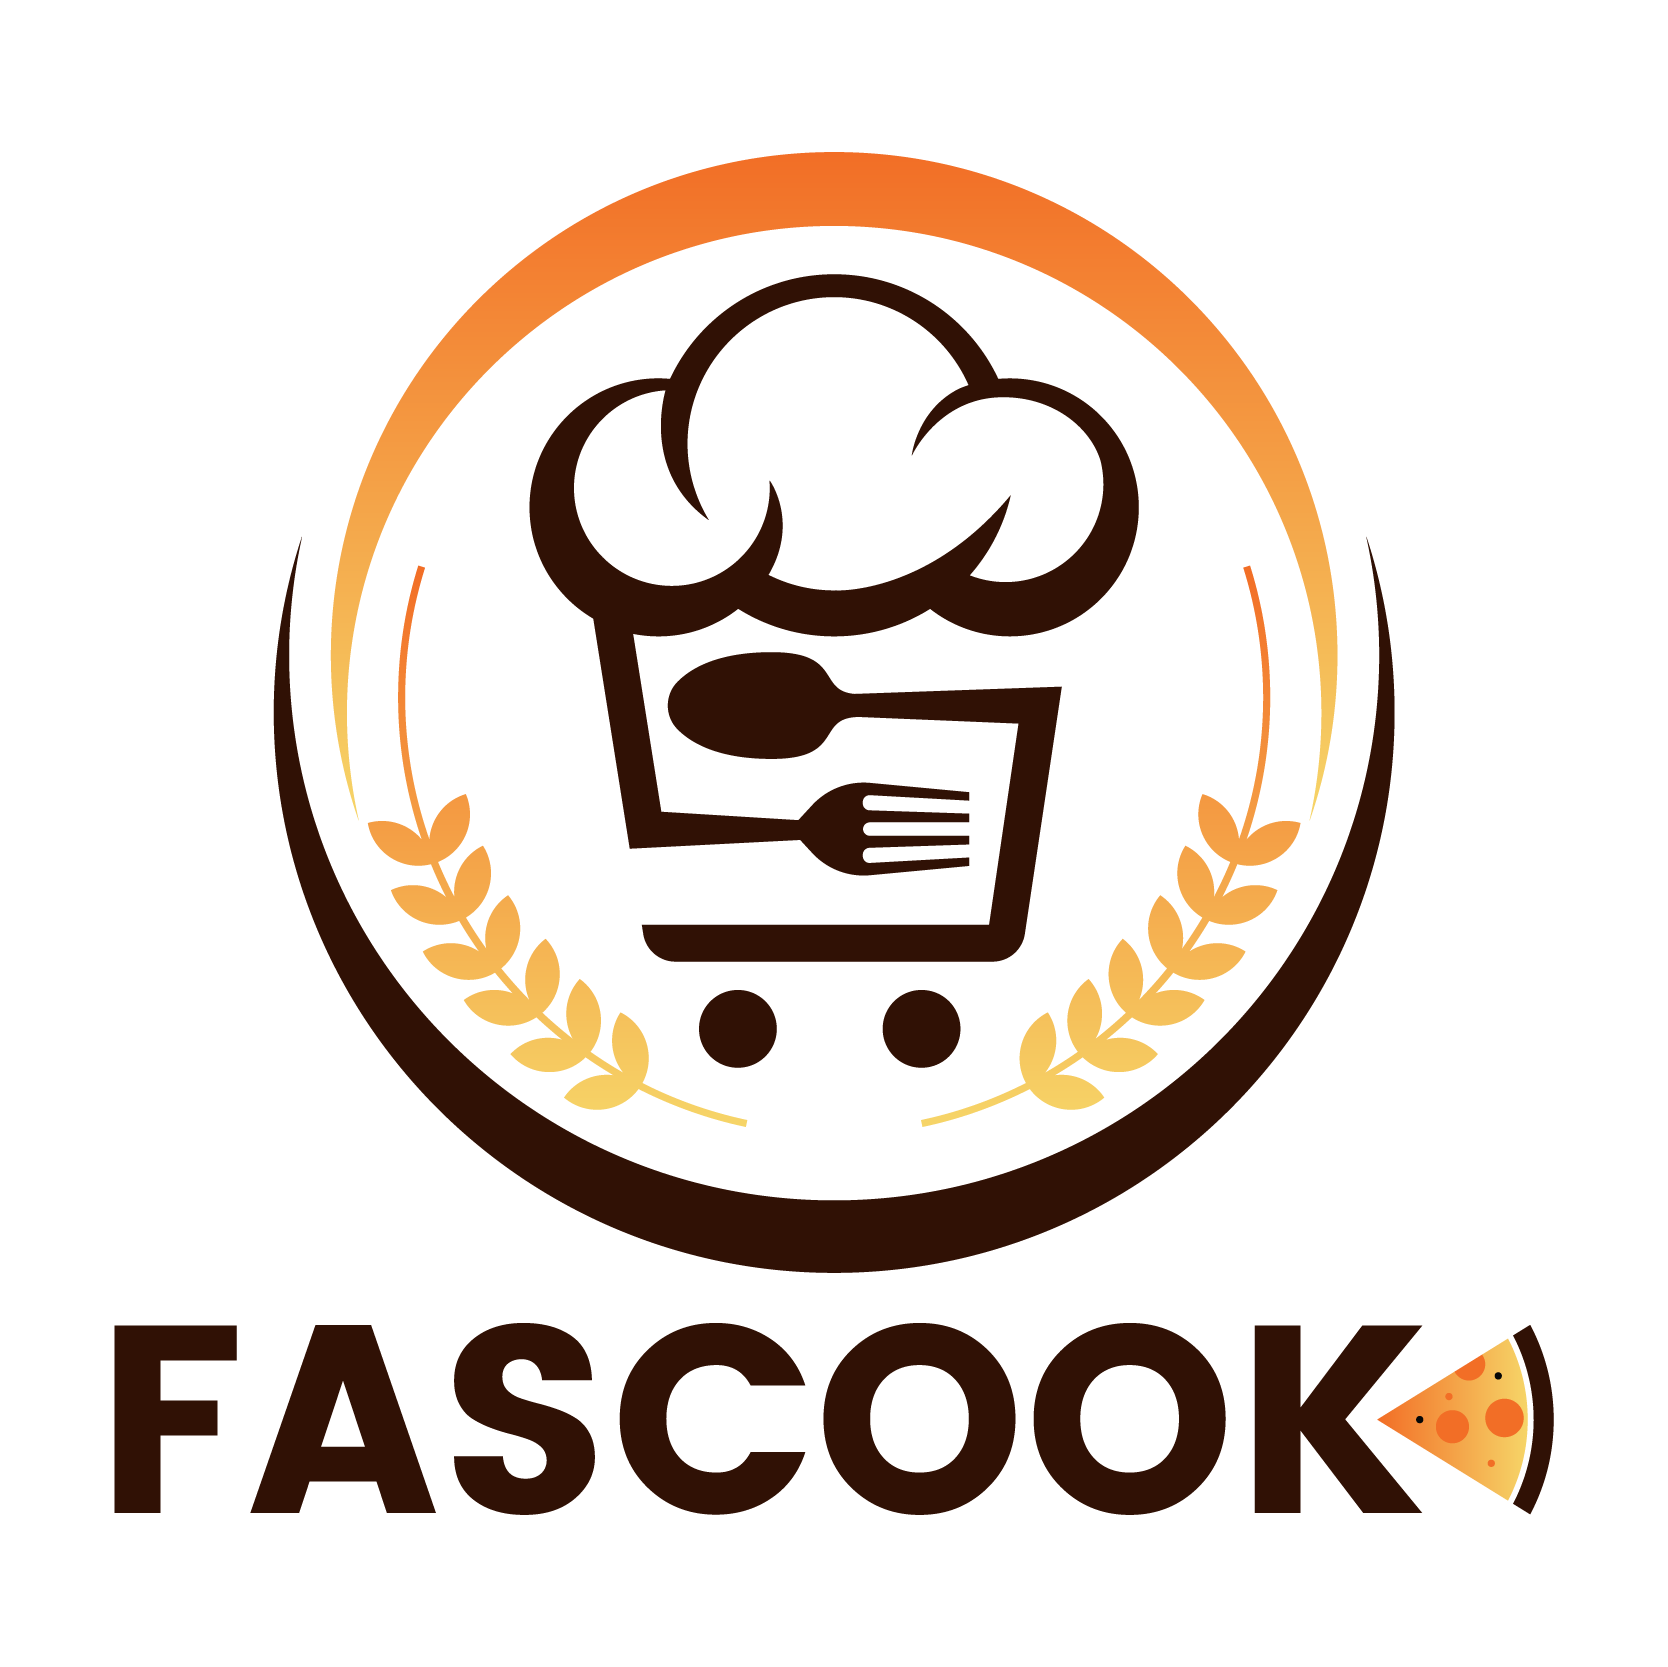 Fascook